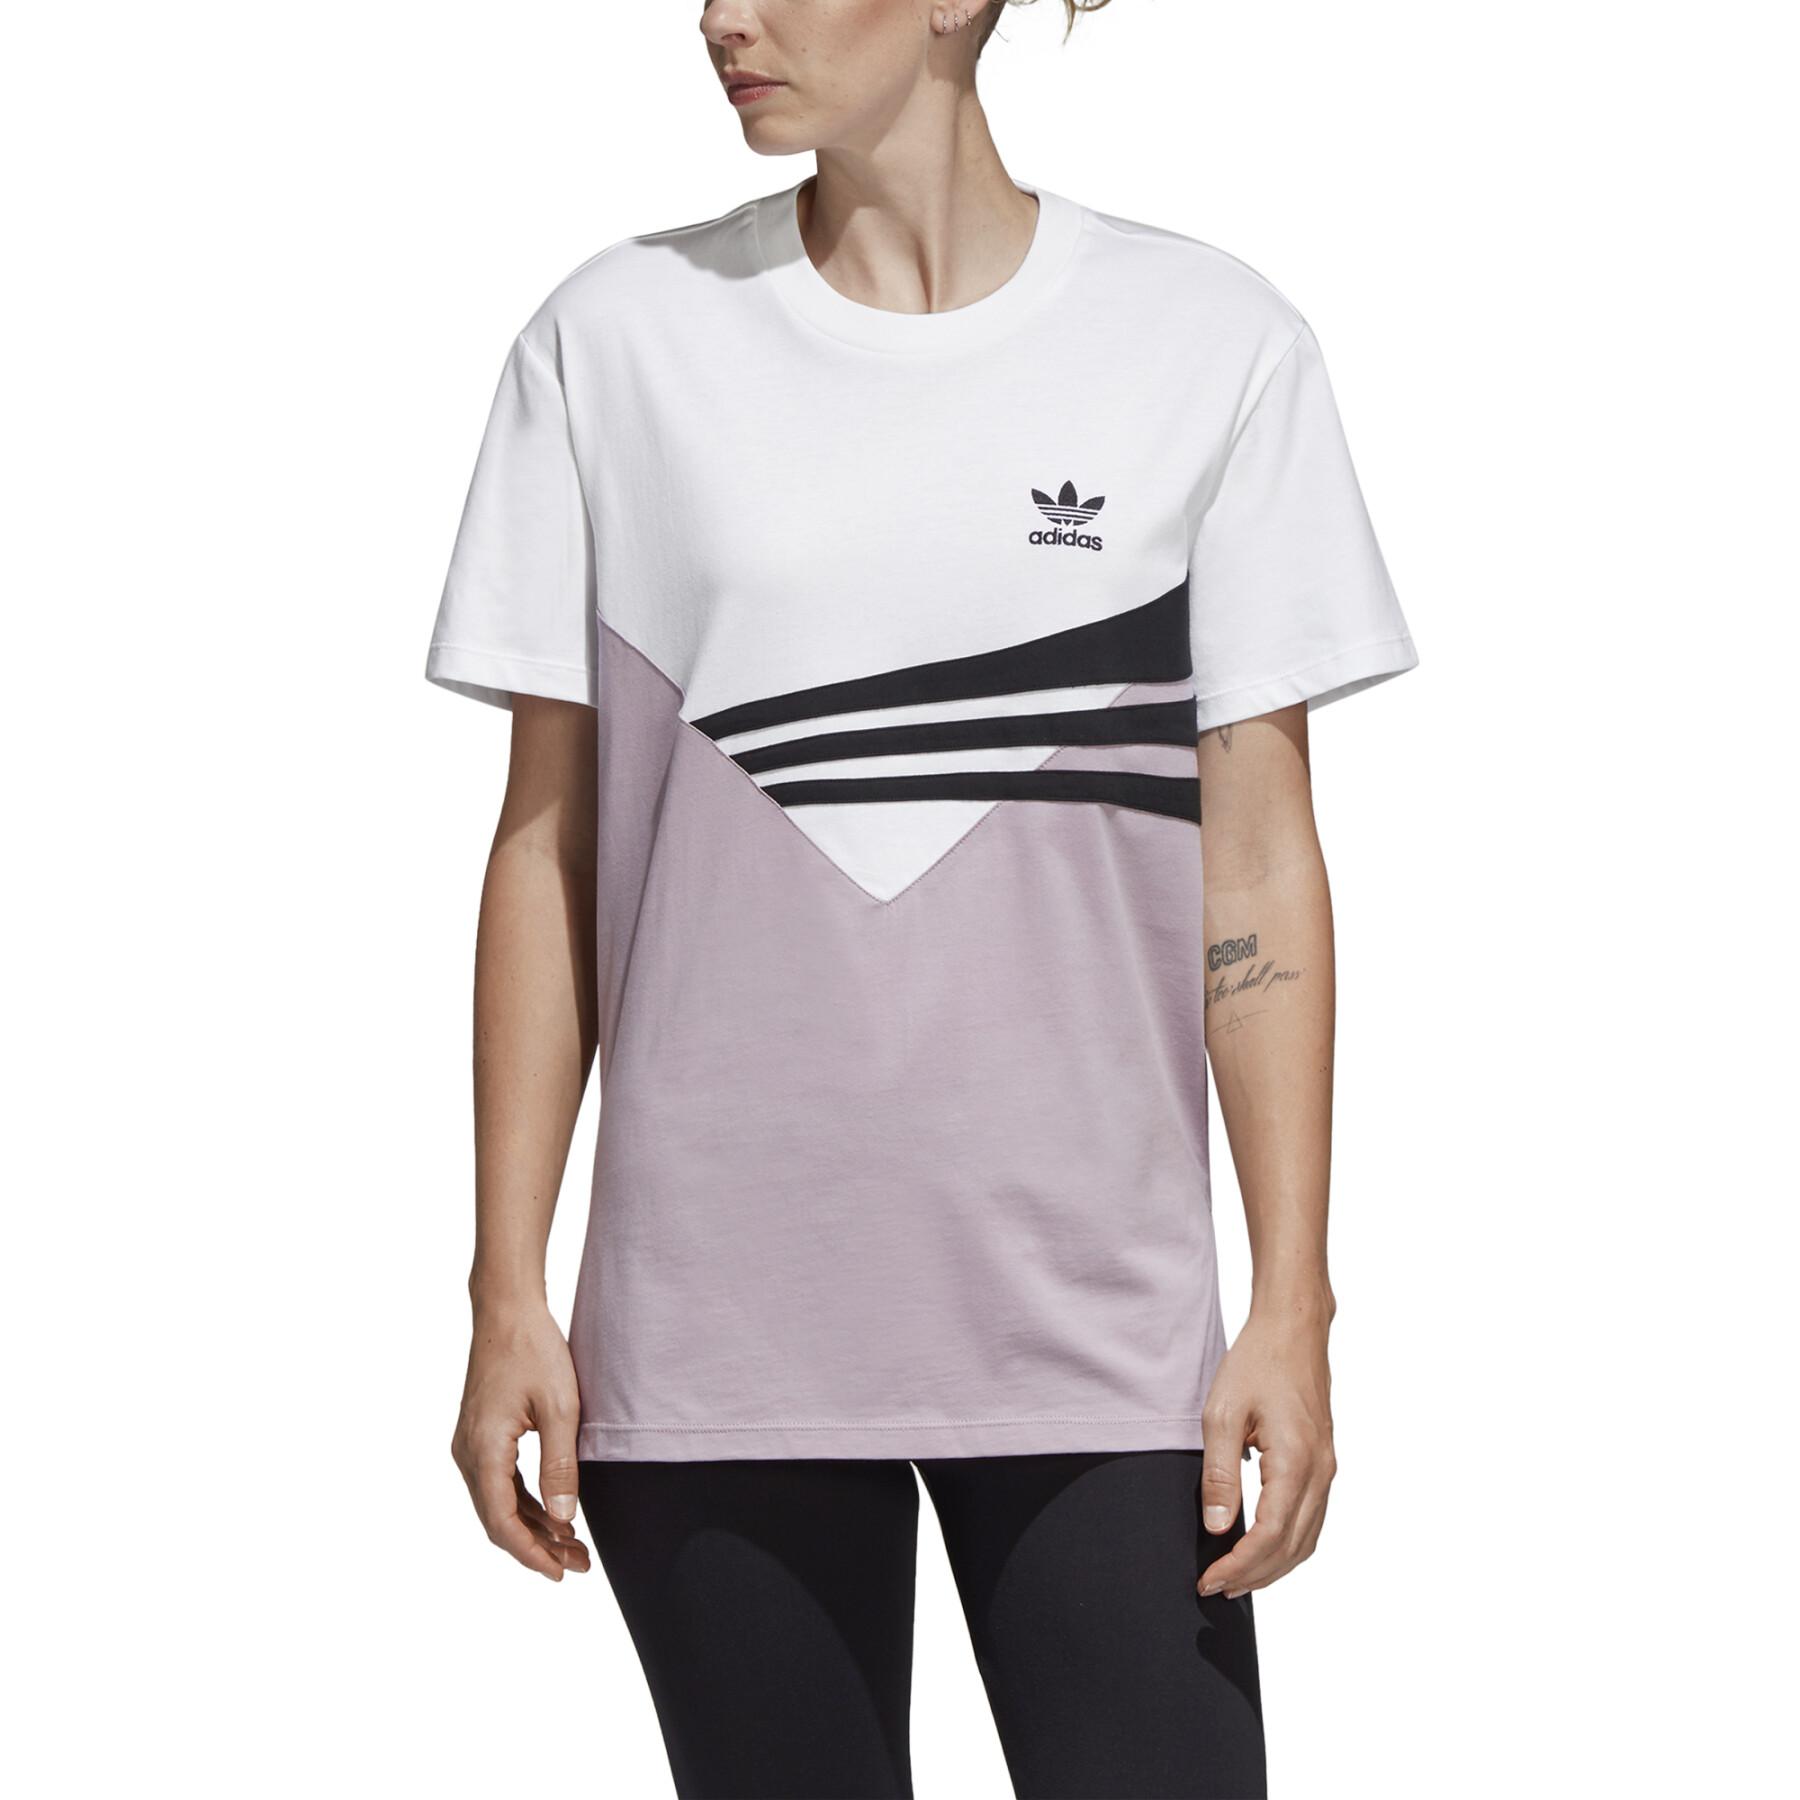 Koszulka damska adidas logo